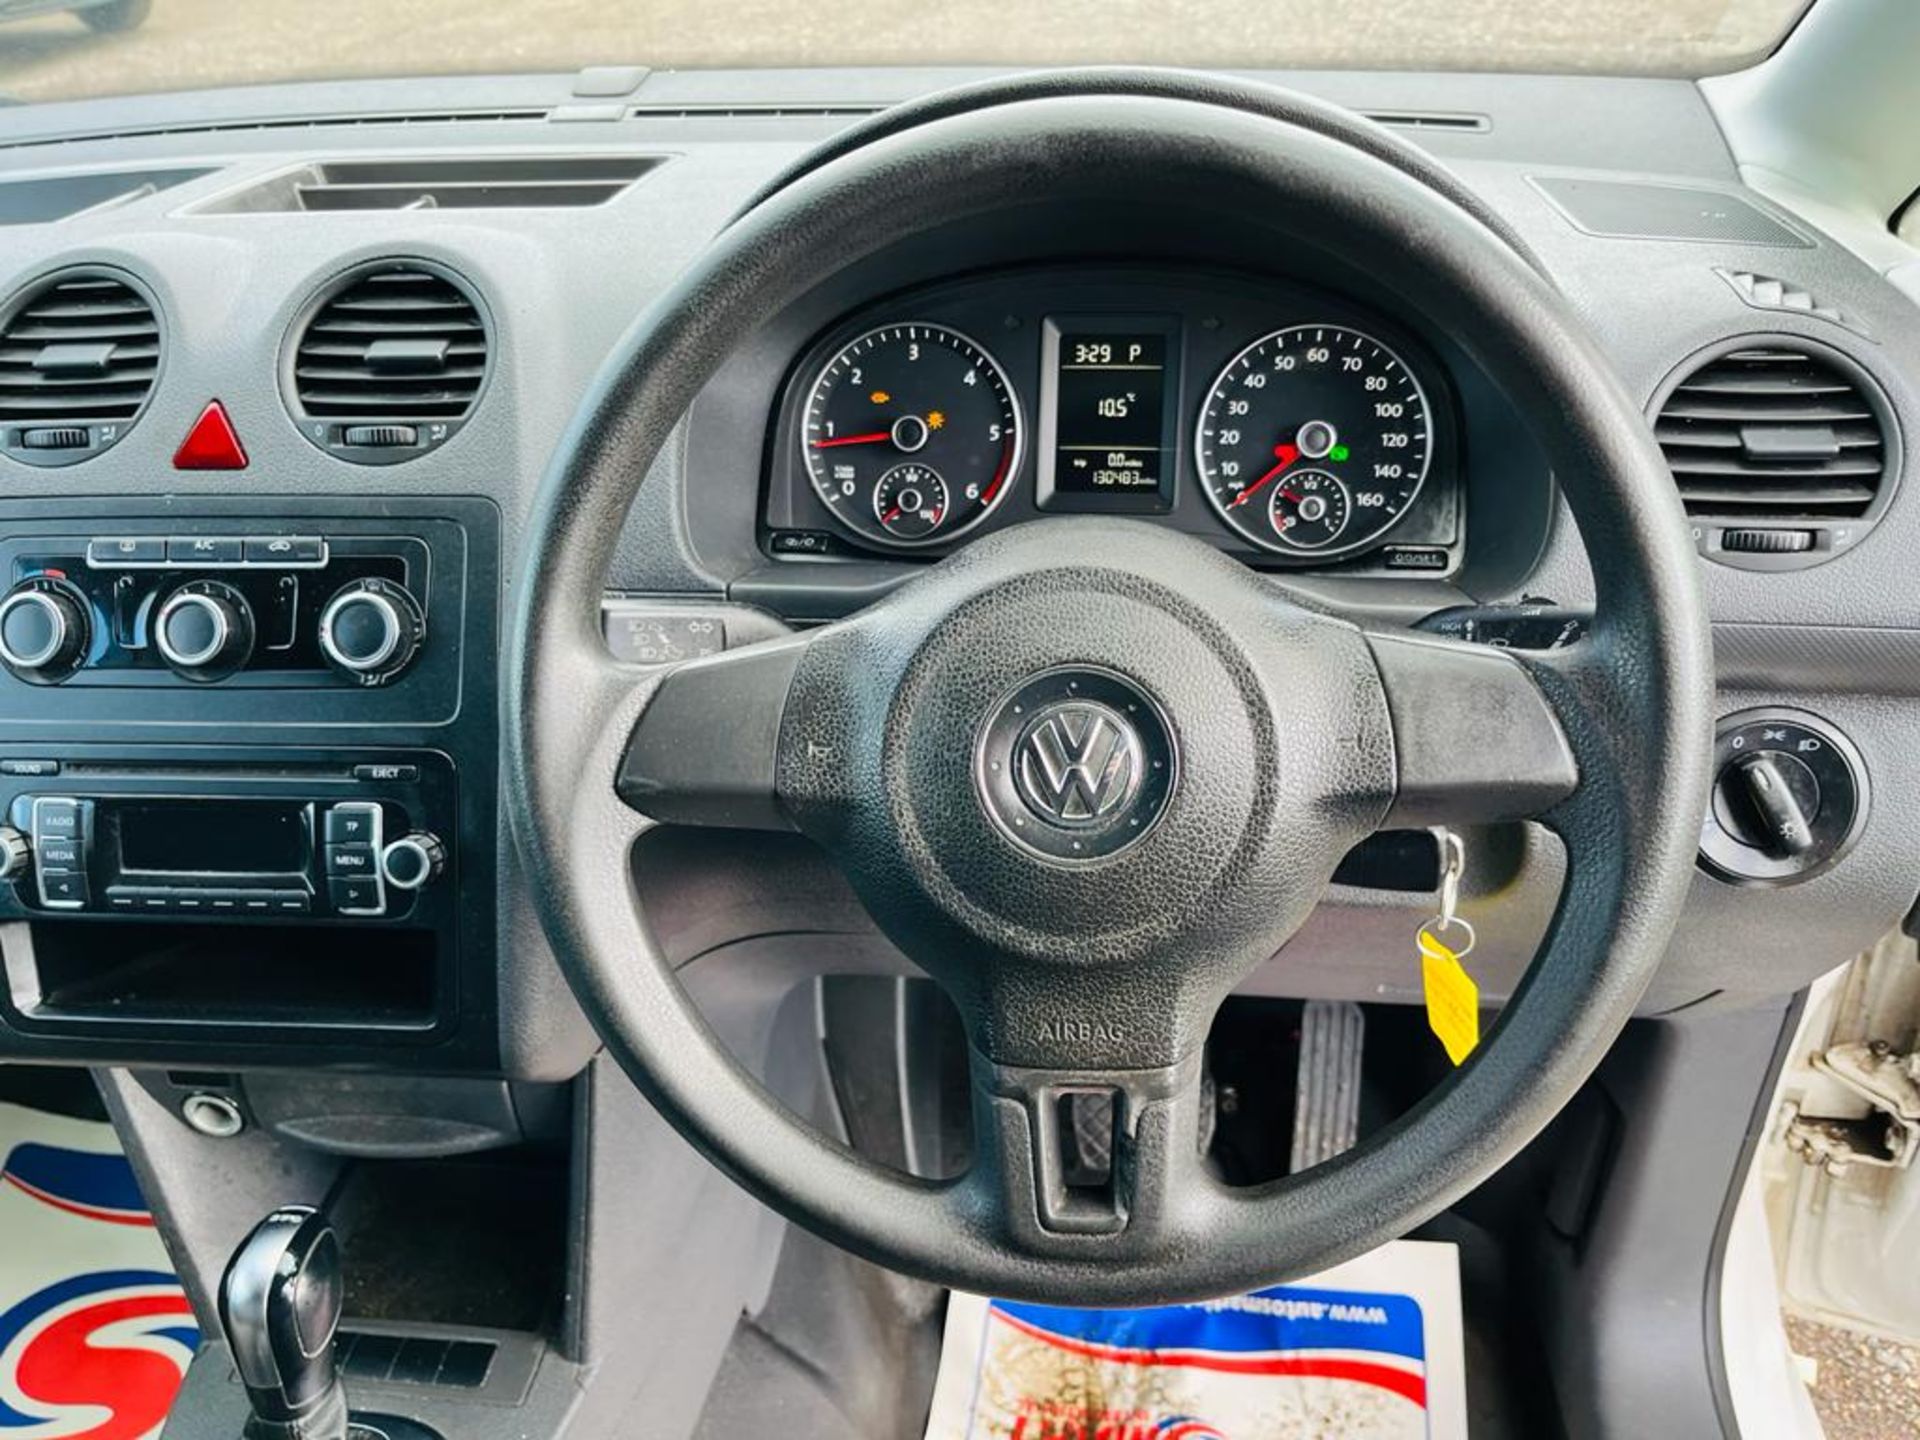 ** ON SALE ** Volkswagen Caddy Maxi 1.6 TDI C20 StartLine DSG Automatic 2014 '14 Reg ' - A/C - Image 17 of 25